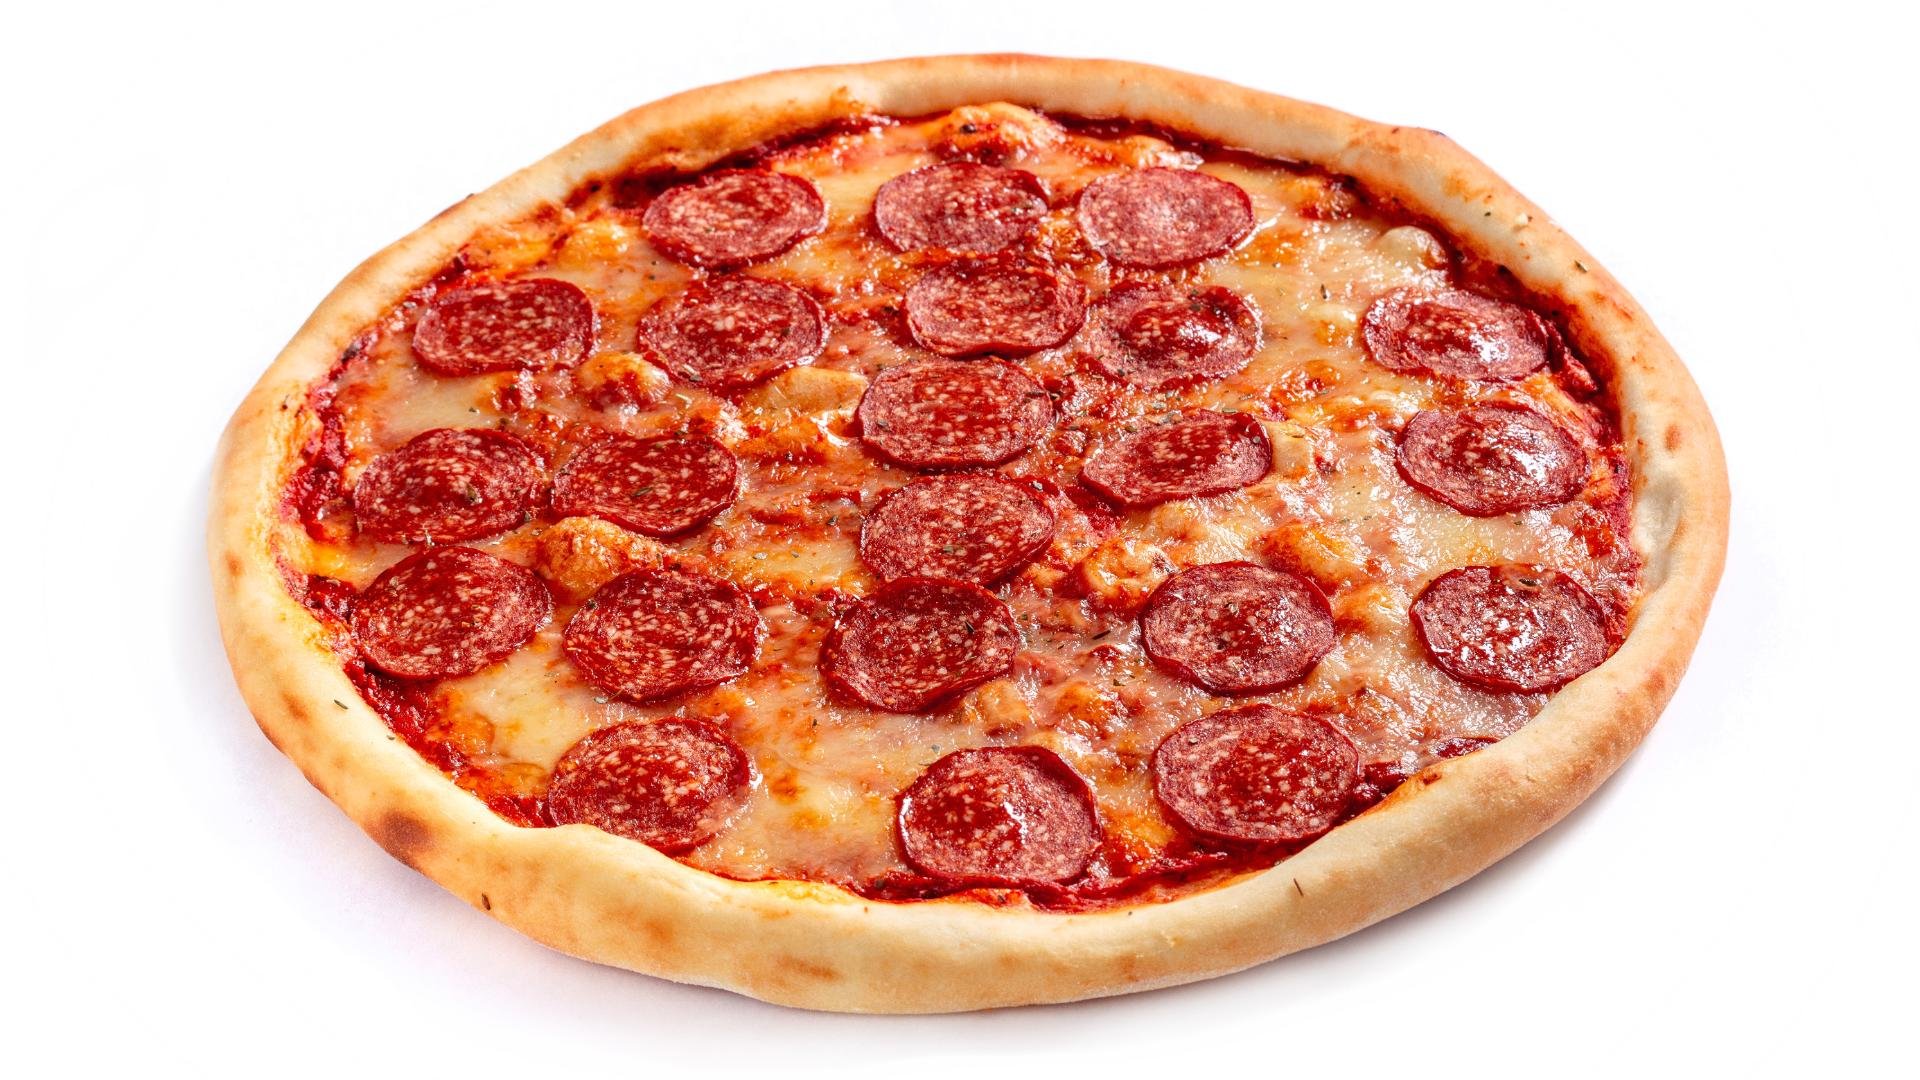 что означает пепперони в пицце фото 65